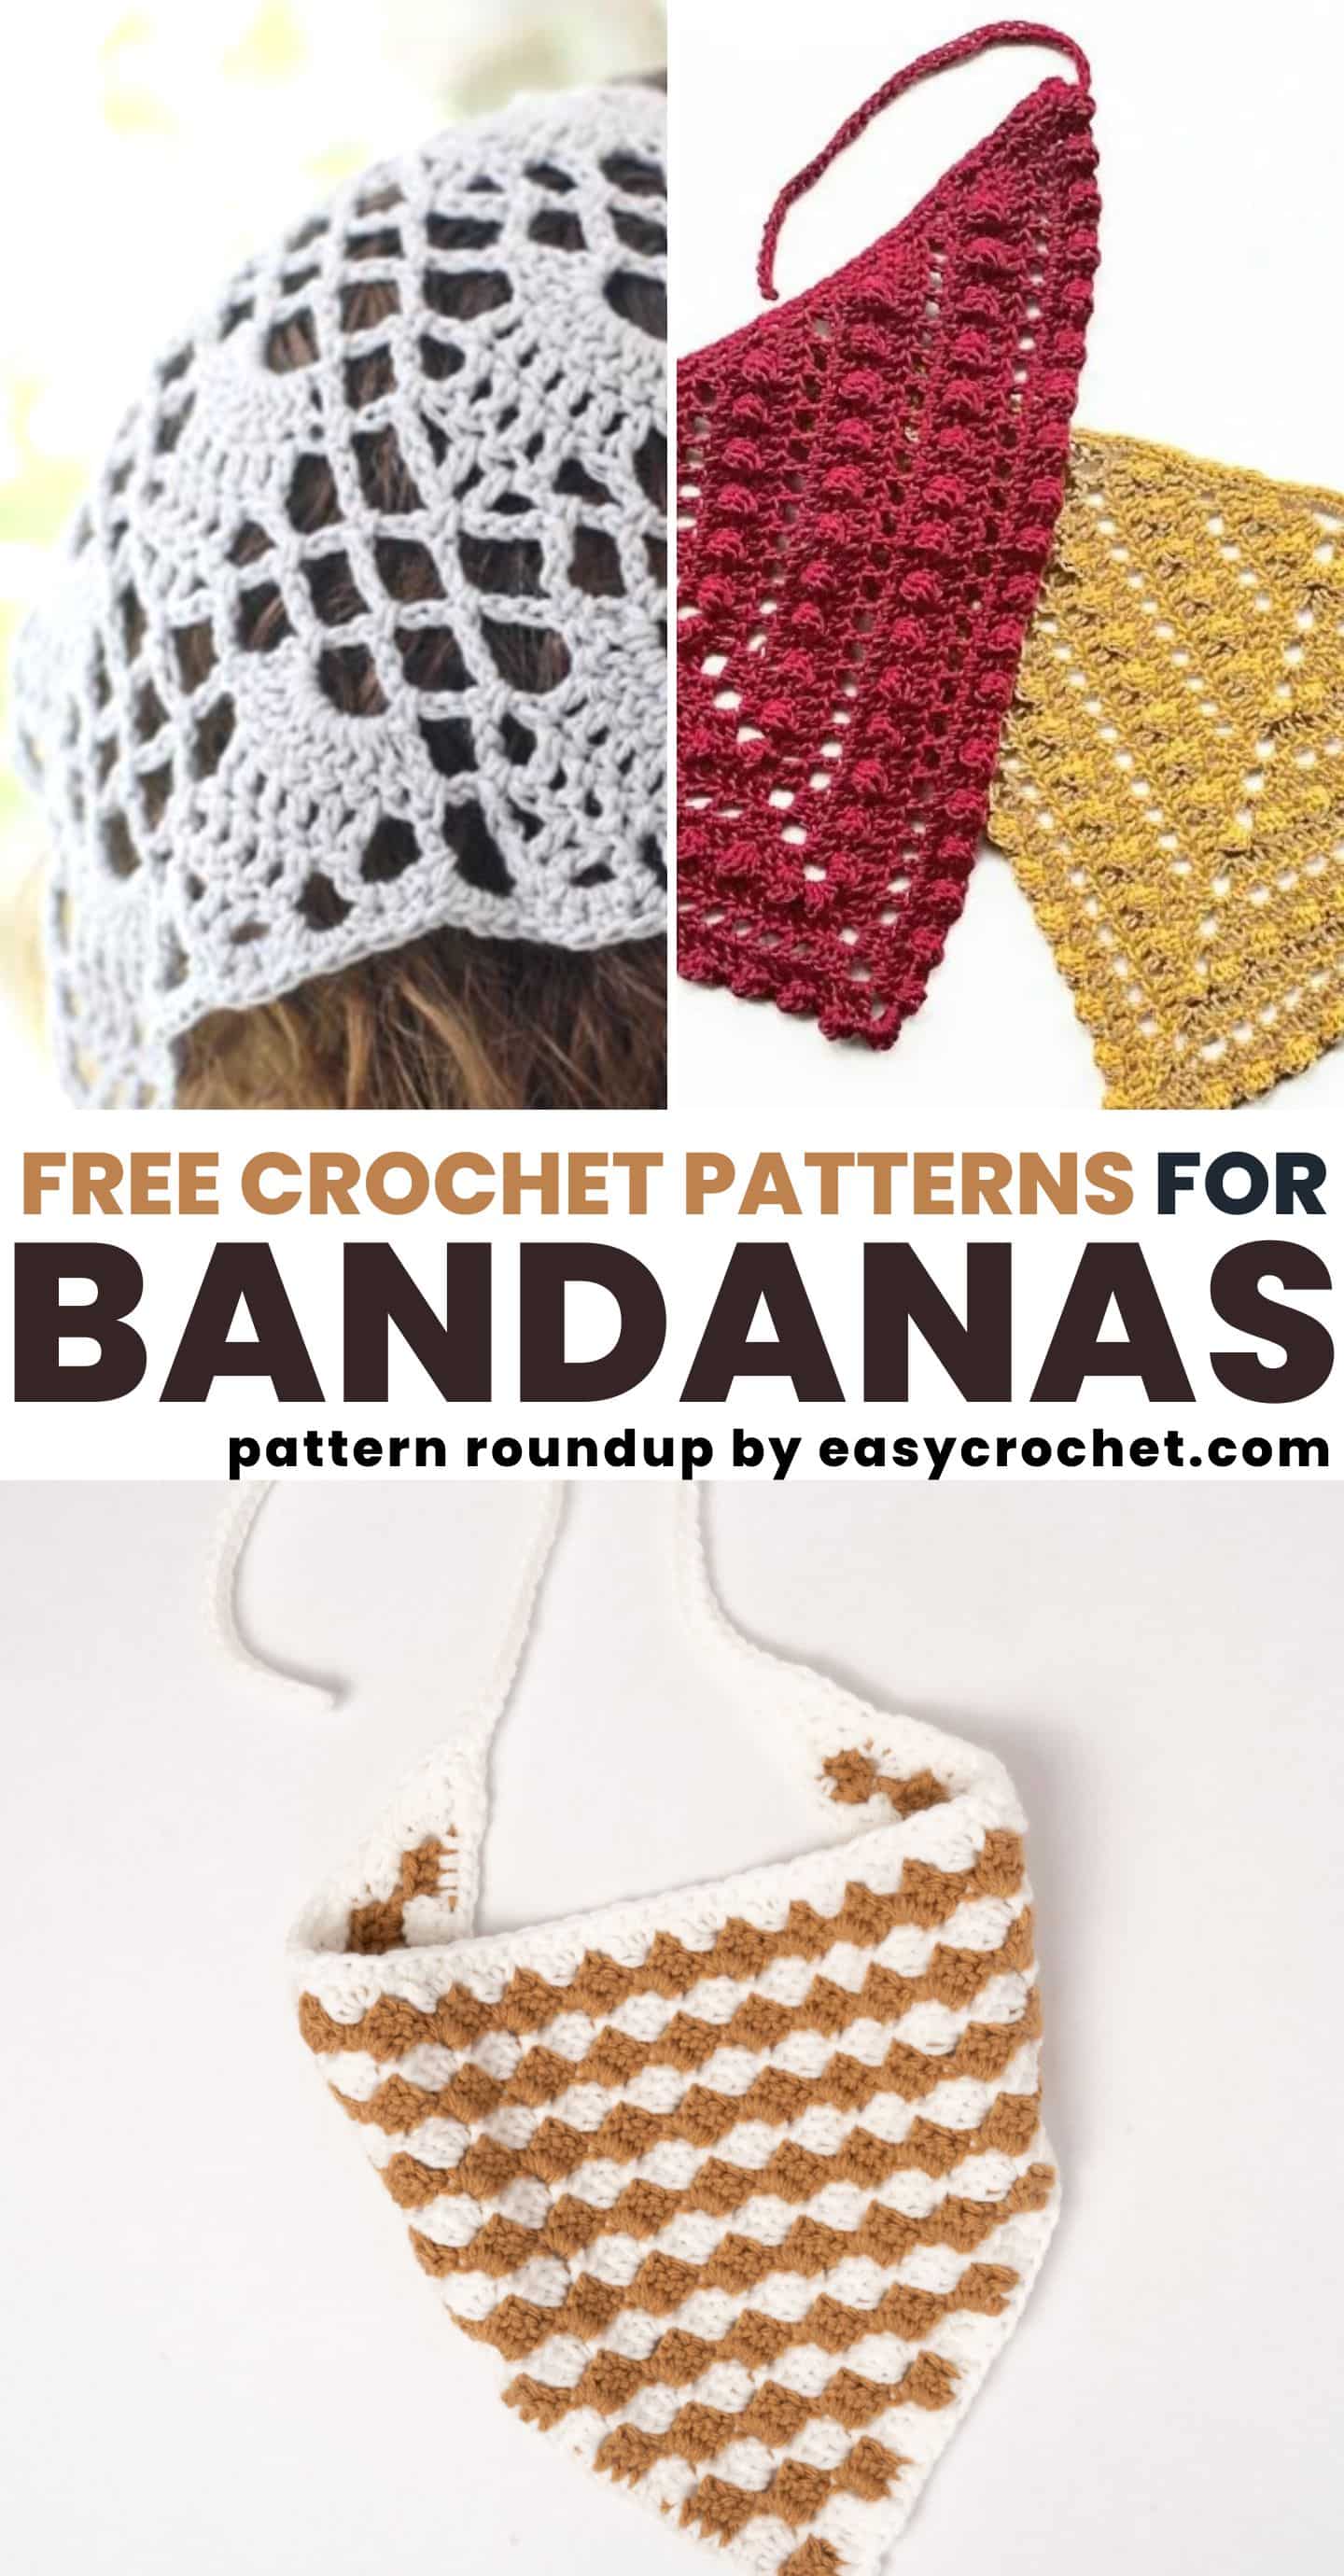 15 Free Crochet Bandana Patterns for all Skill Levels - Easy